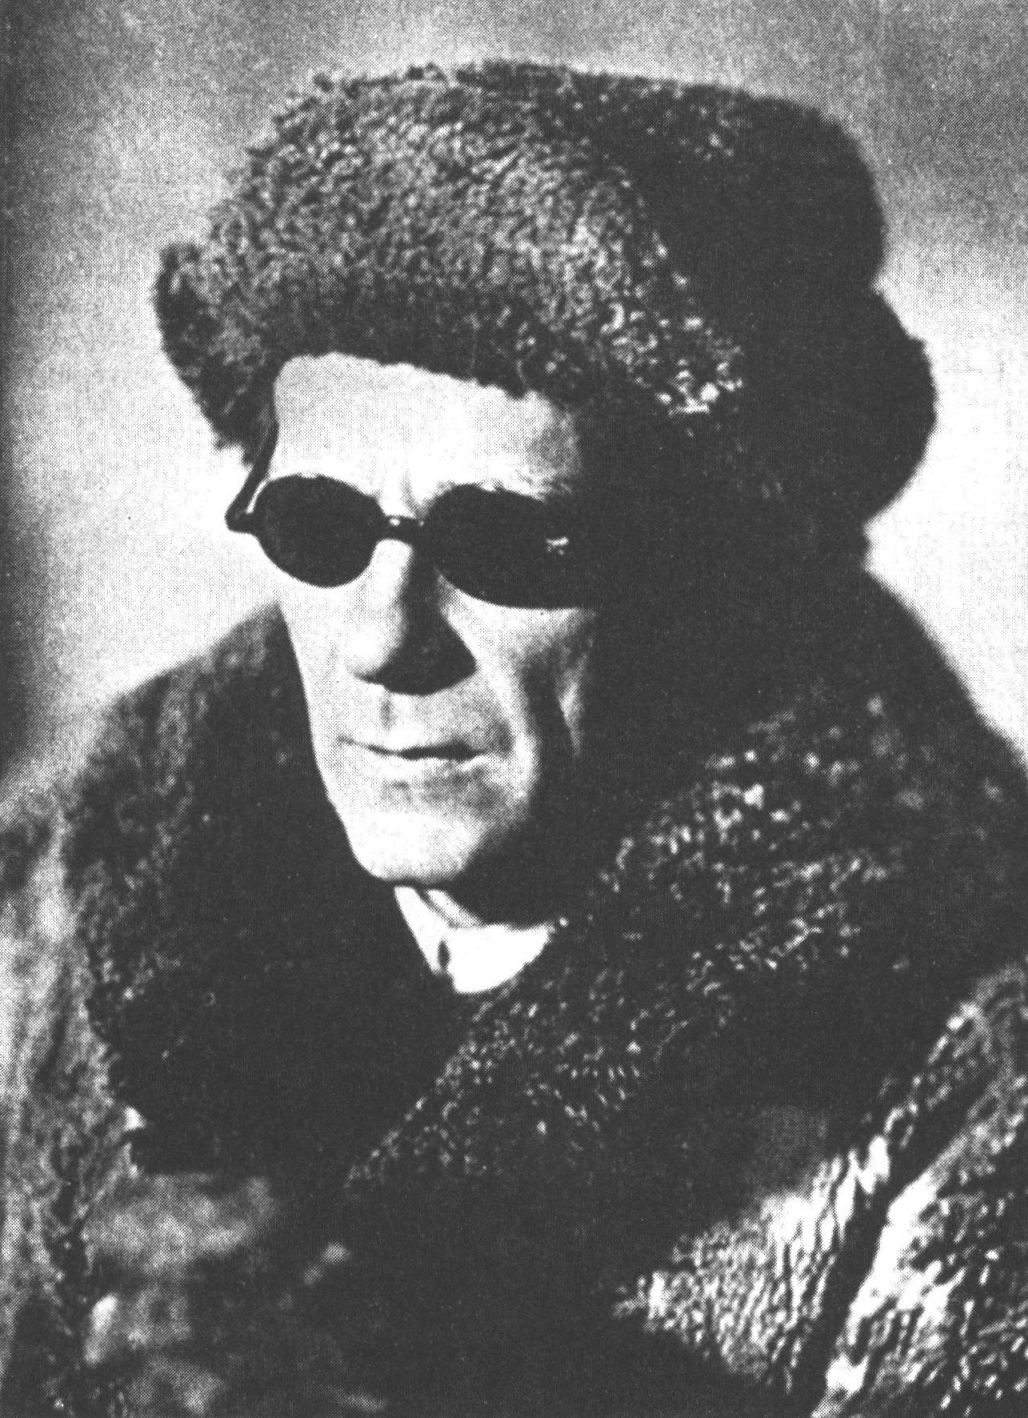 М.А. Булгаков. Барвиха, 1939 г.